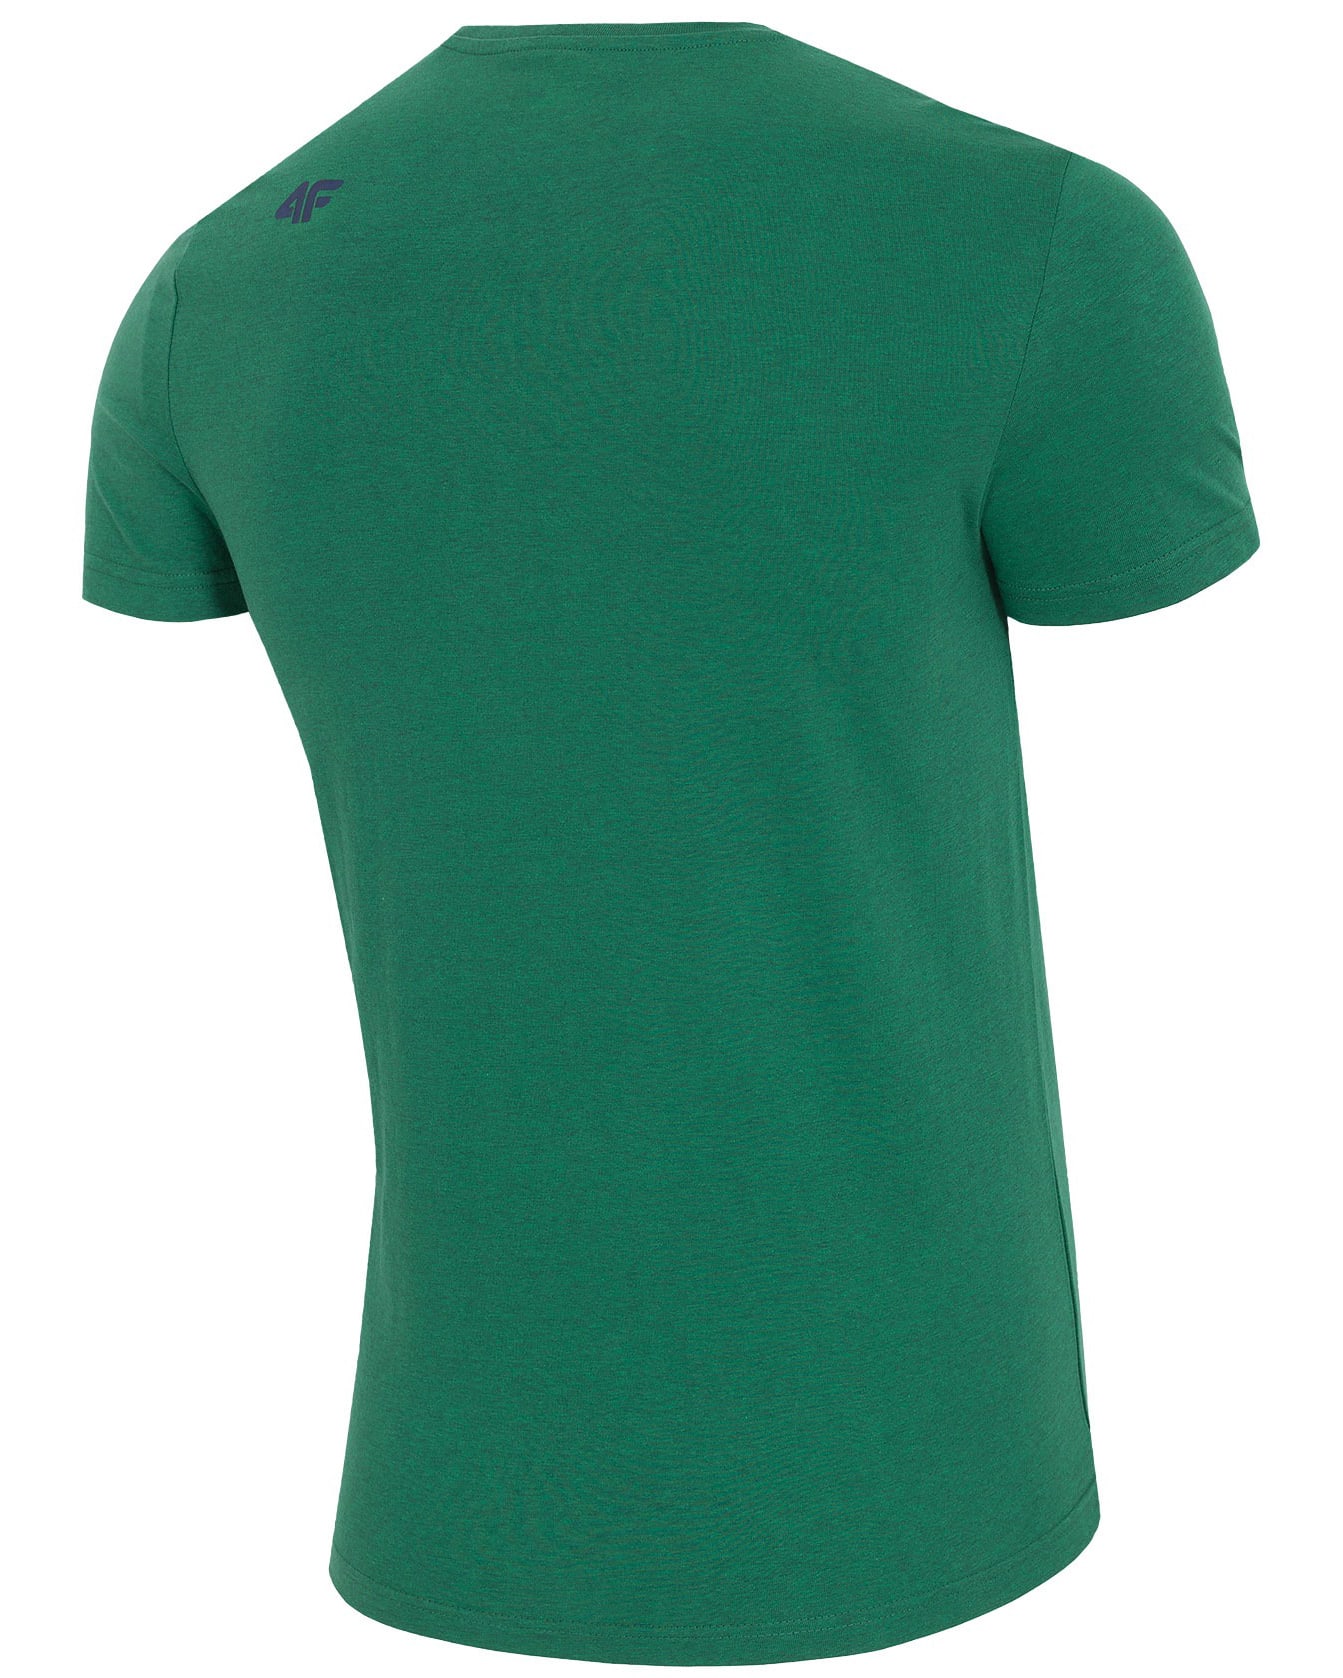 4F Man's T-Shirt - Dark Green Melange